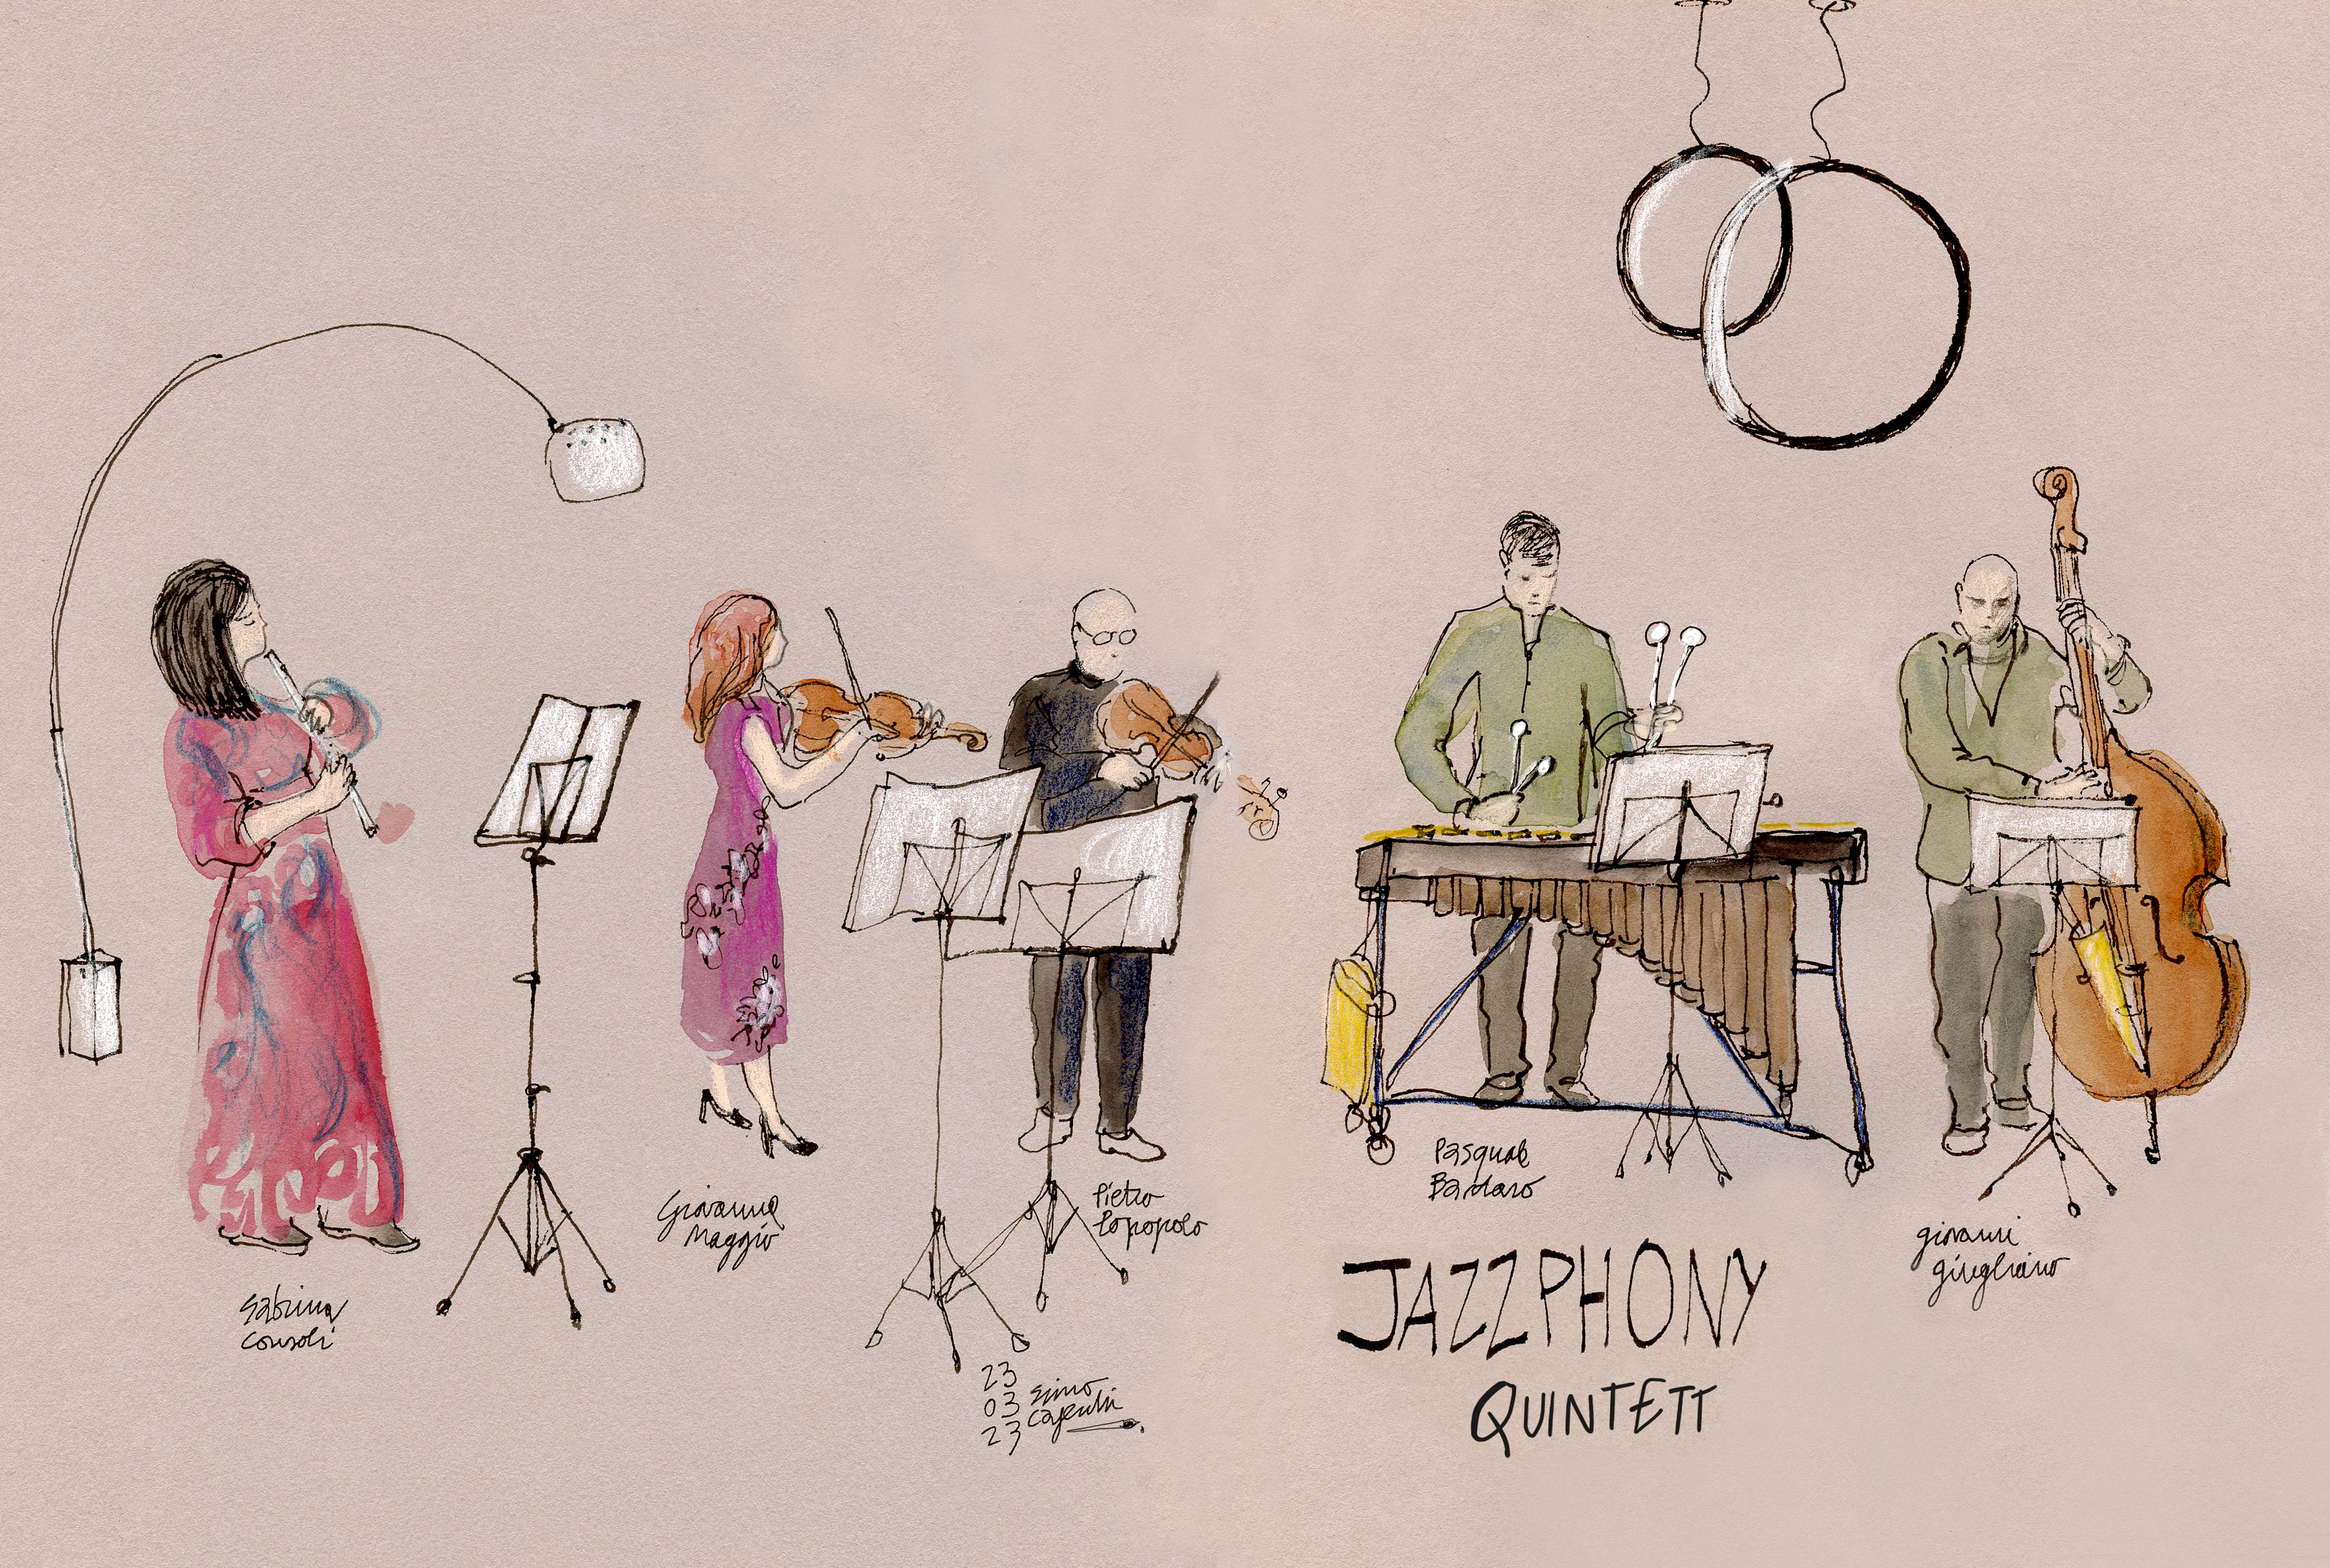 Jazzphony Quintett